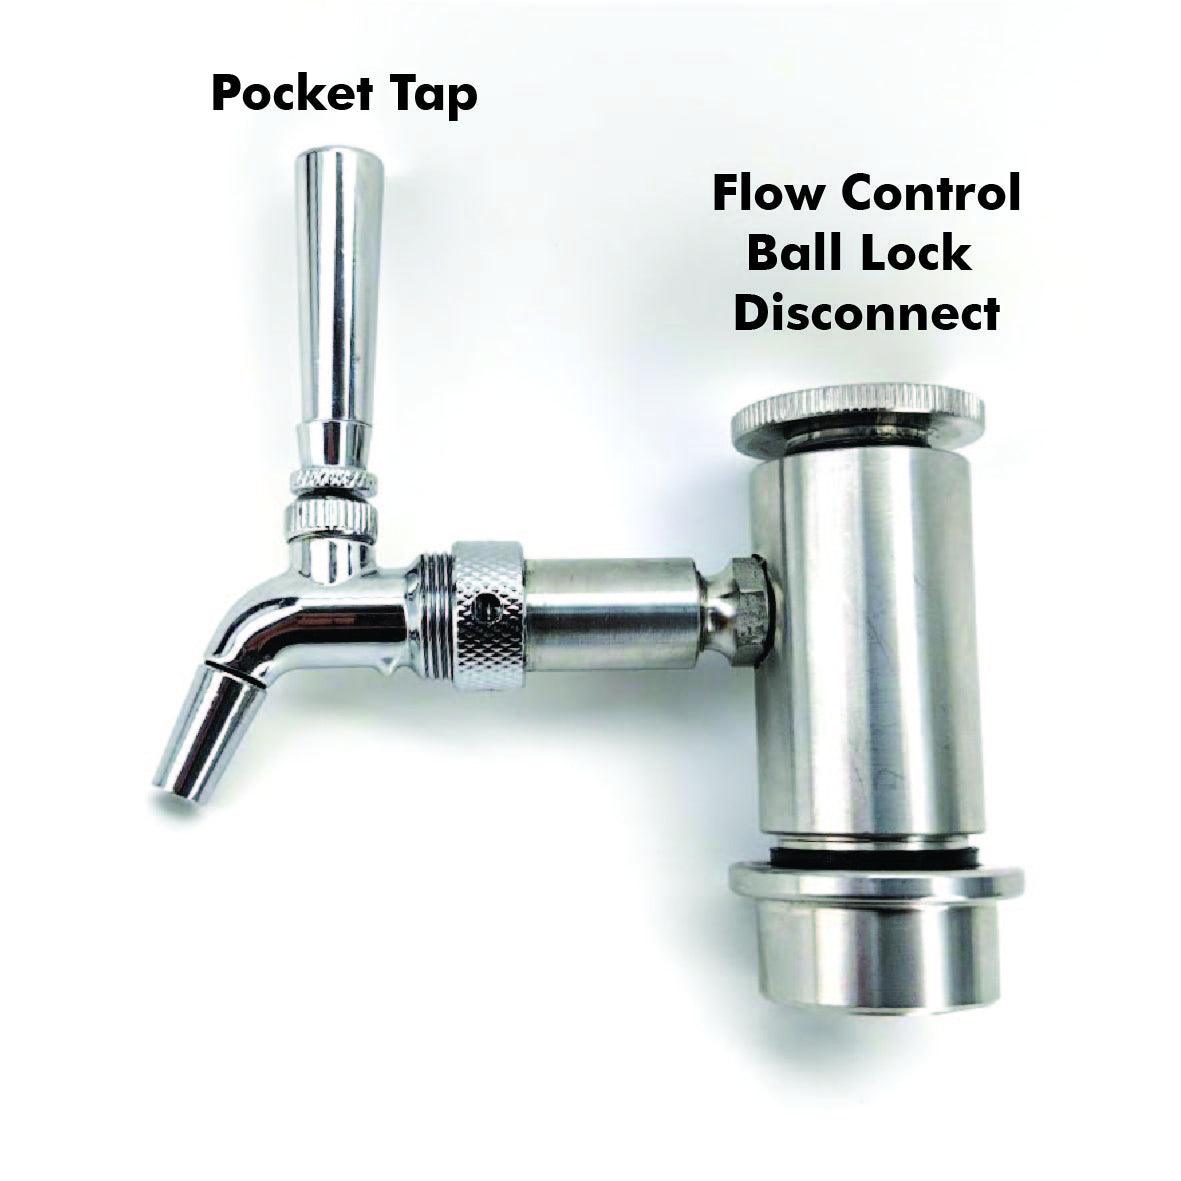 Flow Control Ball Lock Disconnect (Flow Restrictor) (SECONDS) - KegLand